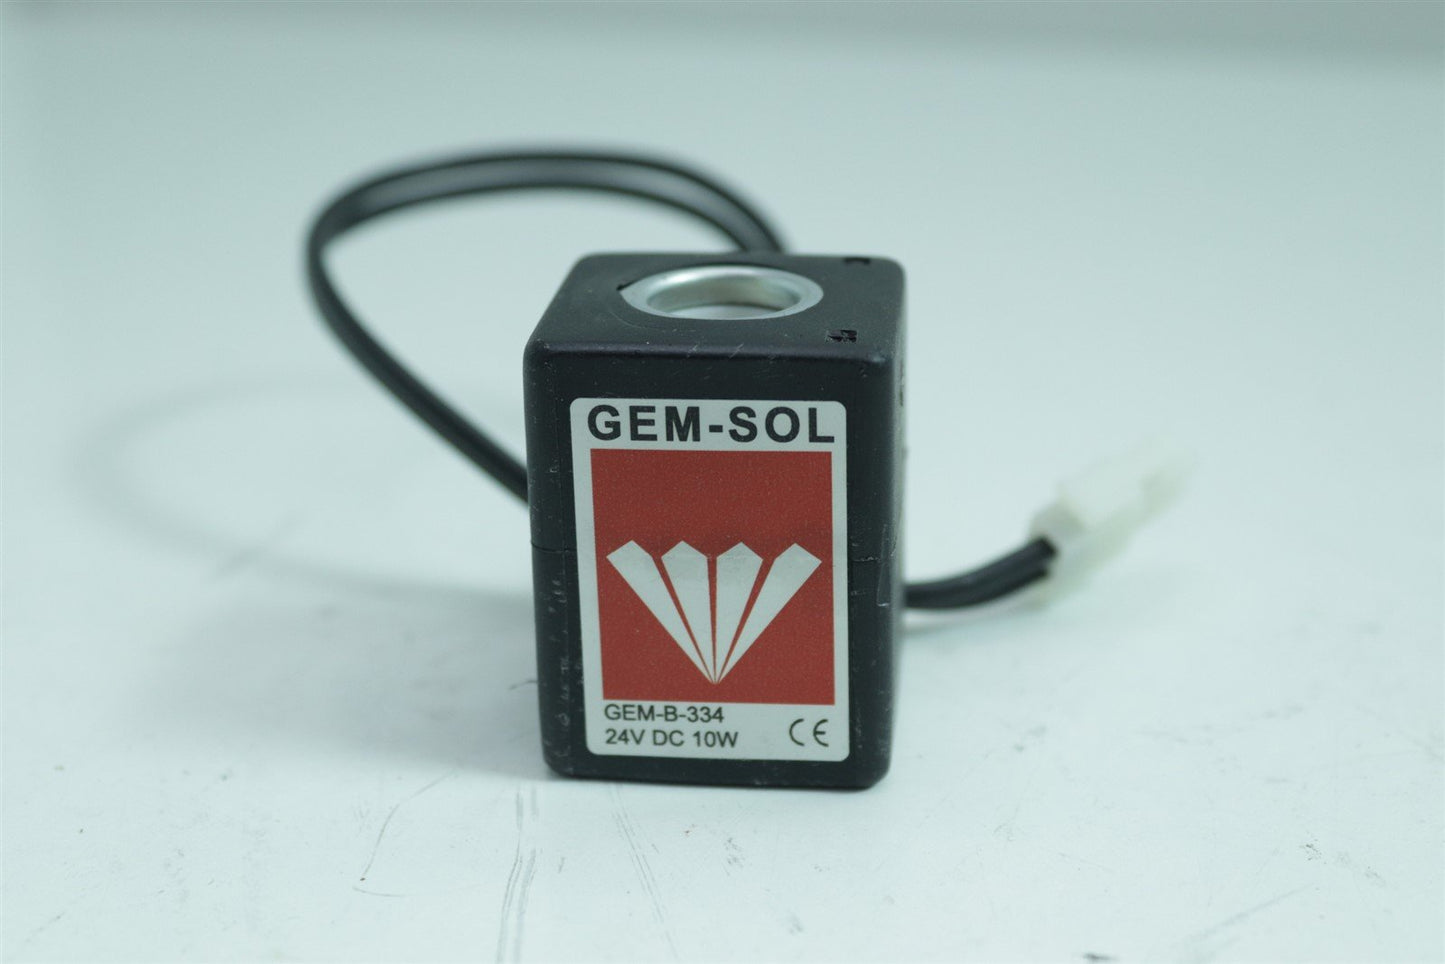 KORNIT DIGITAL Gem-sol GEM-B-334 GEM SOL valves 10w 24v dc